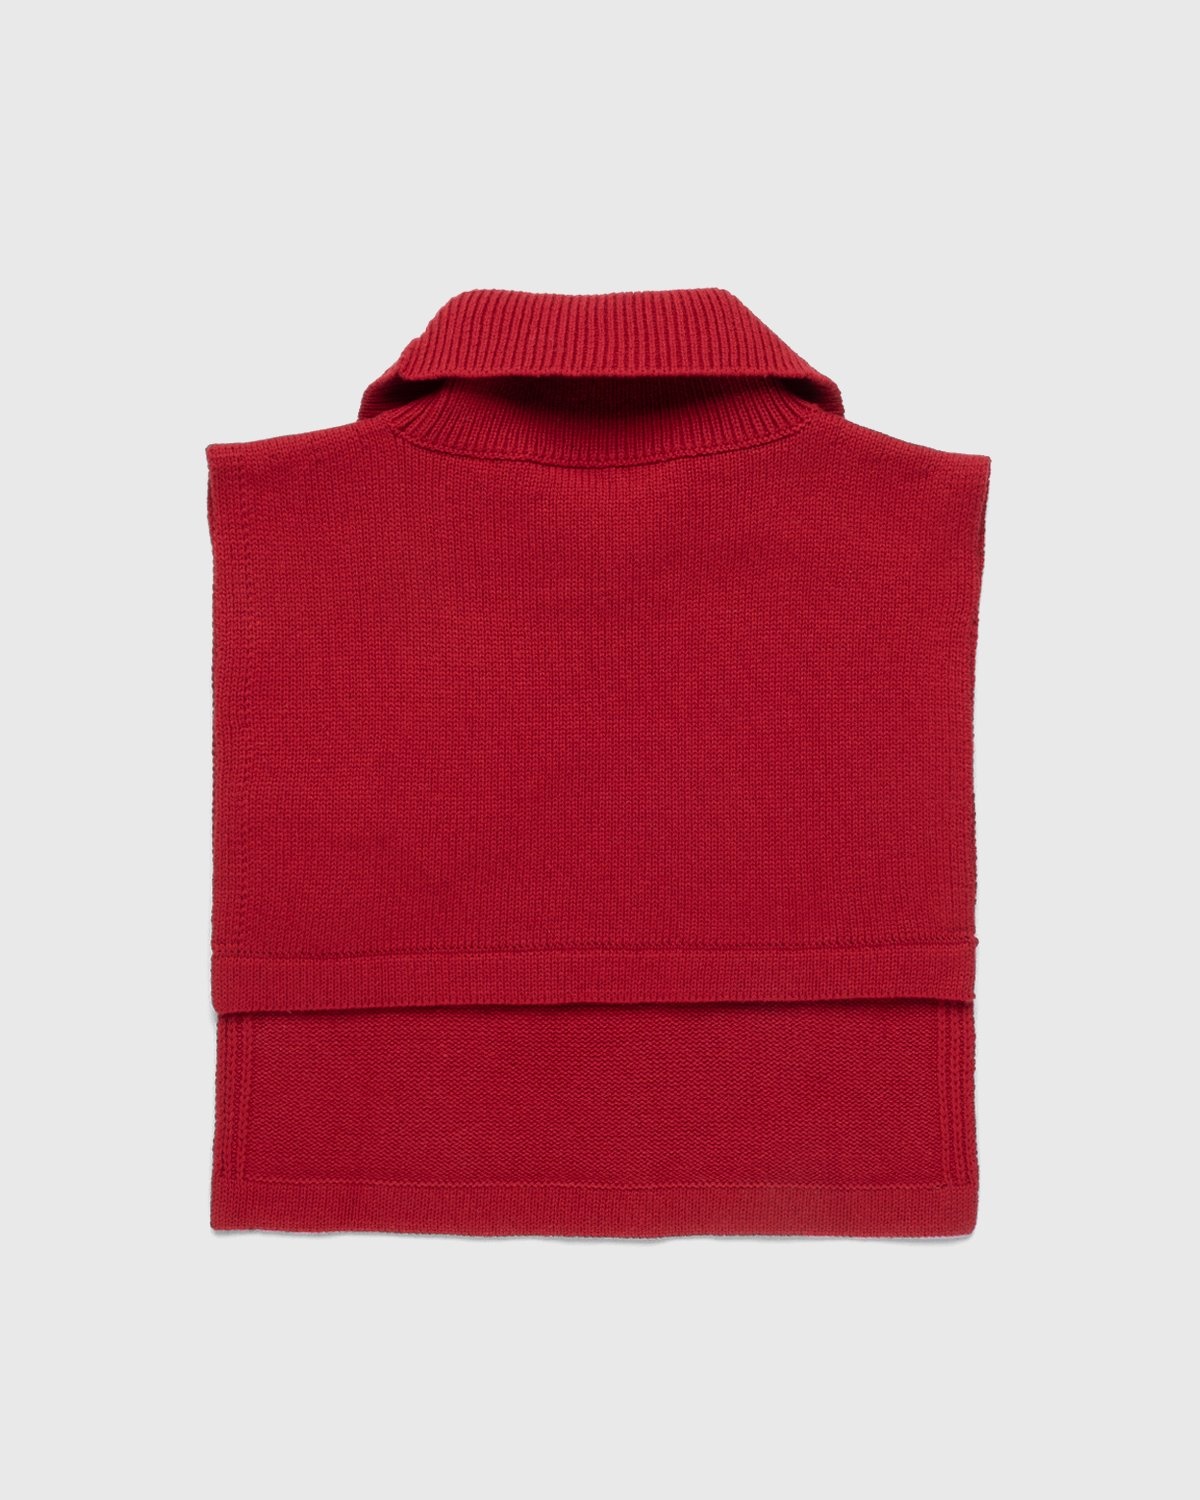 Jil Sander – Plastron Bib Red - Knitwear - Red - Image 2